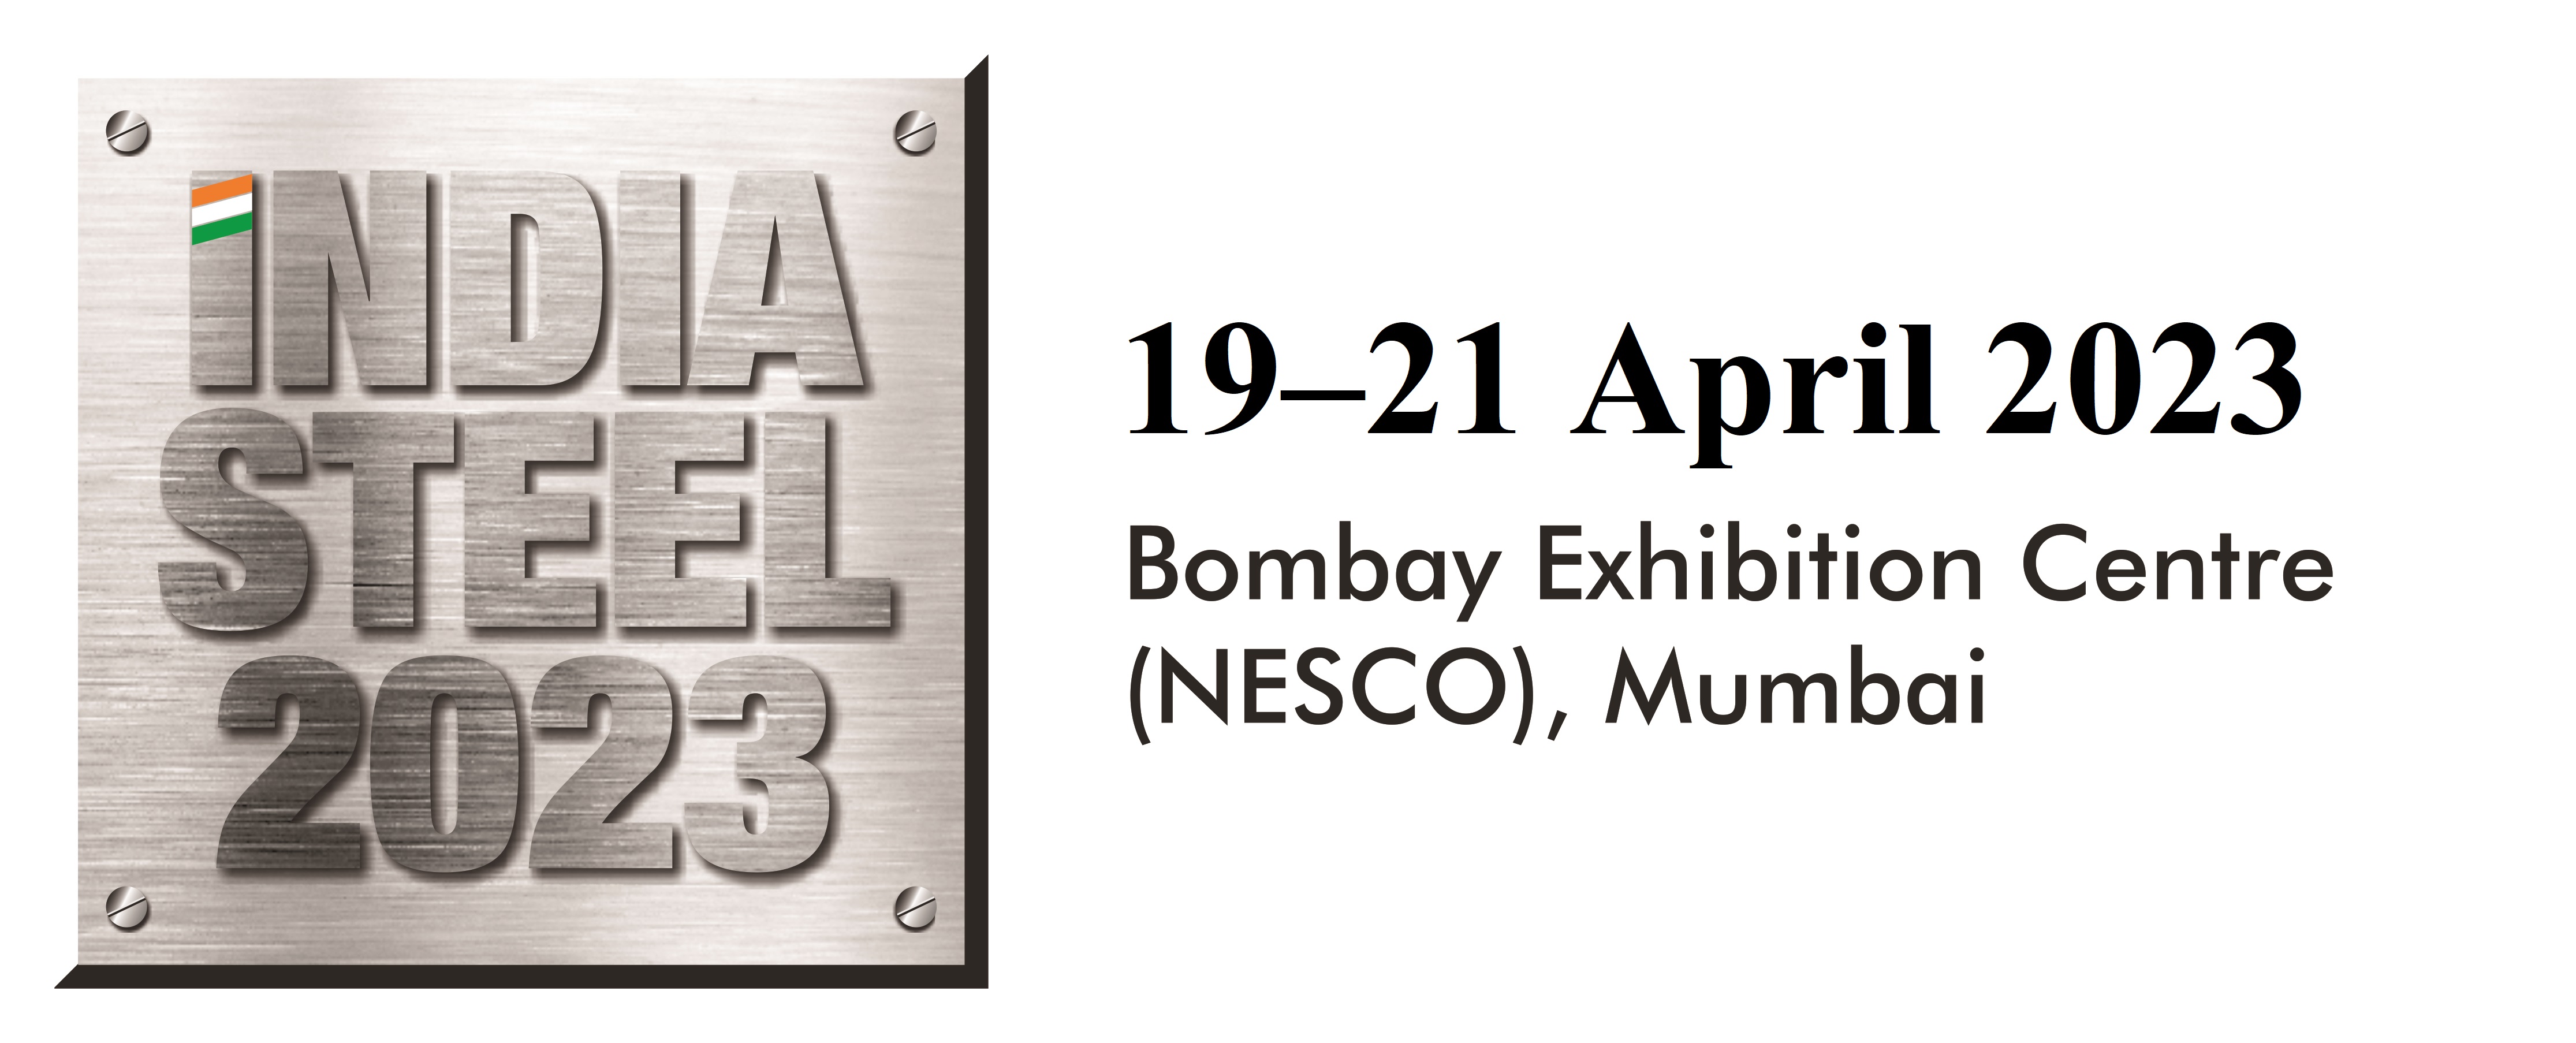 India Steel Expo 2023, 19-21 April 2023 at Mumbai